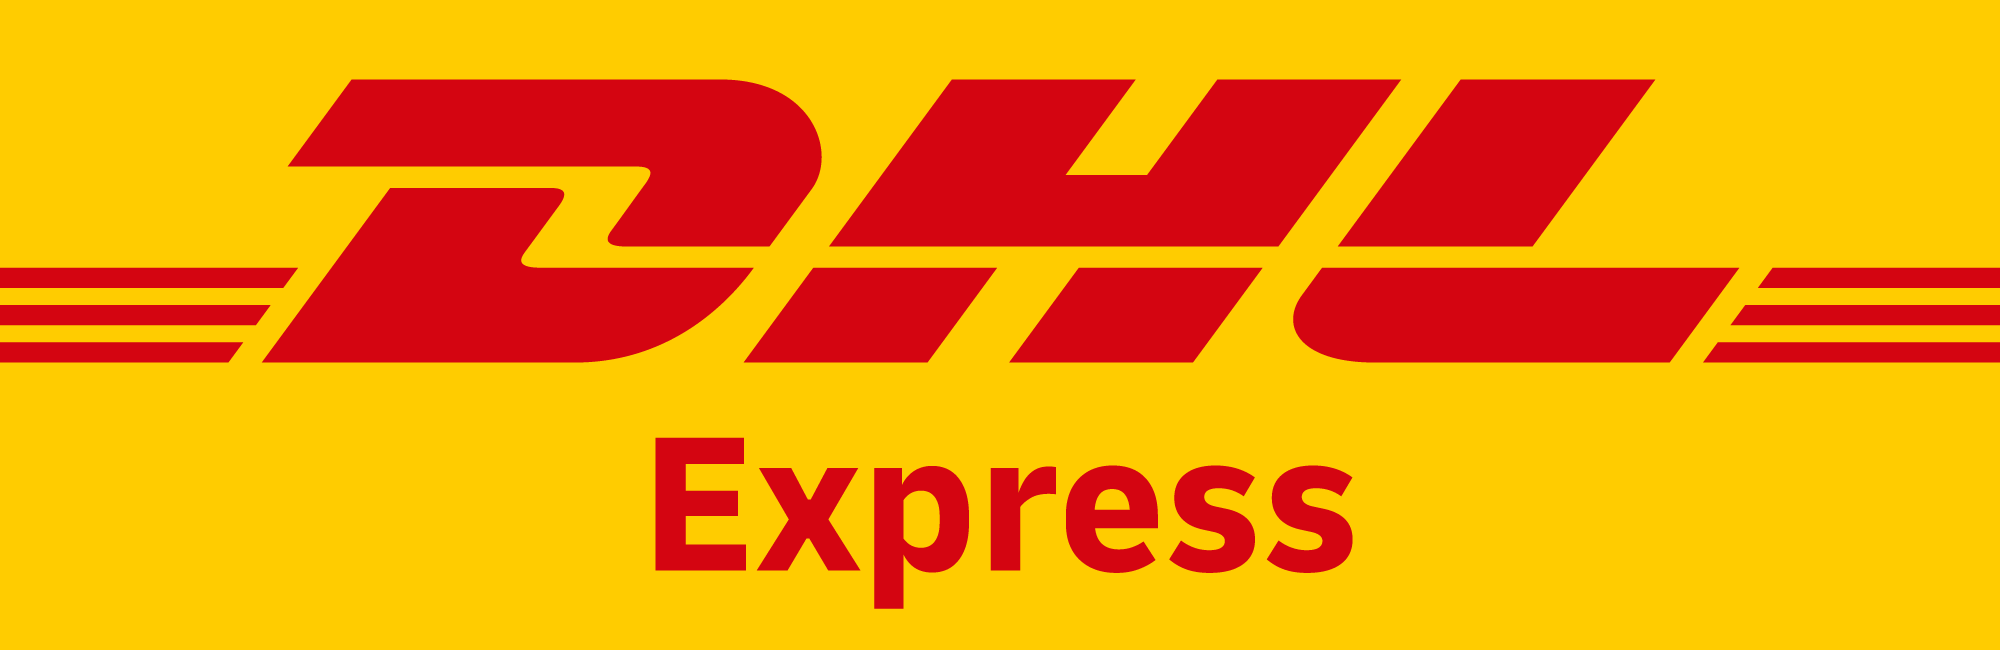 DHL_Express_logo_rgb.png